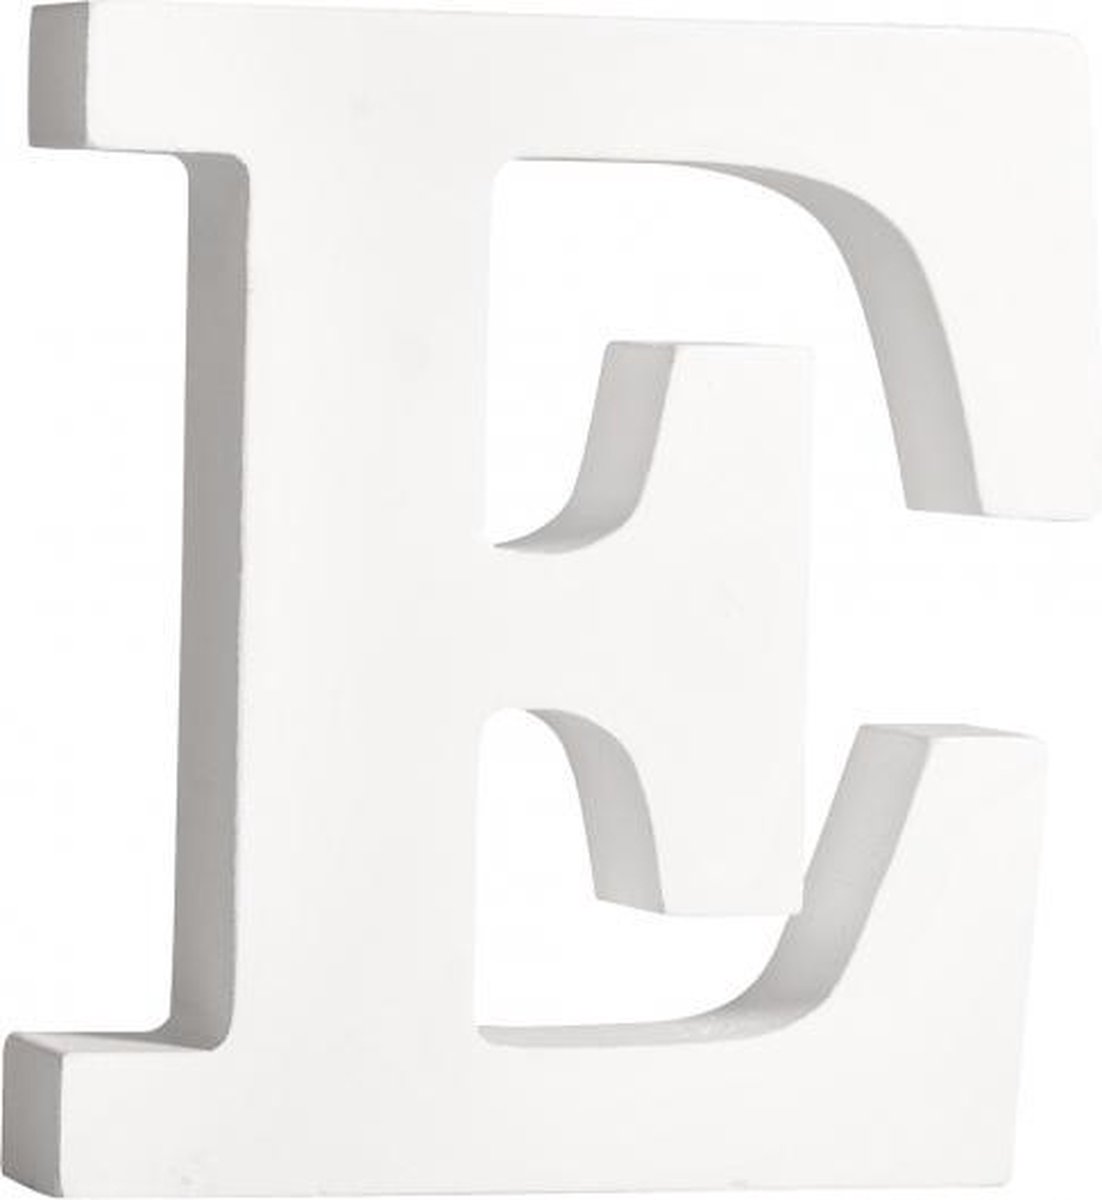 band media diefstal Houten decoratie hobby letters - 4 losse witte letters om het woord - HOME  - te maken... | bol.com